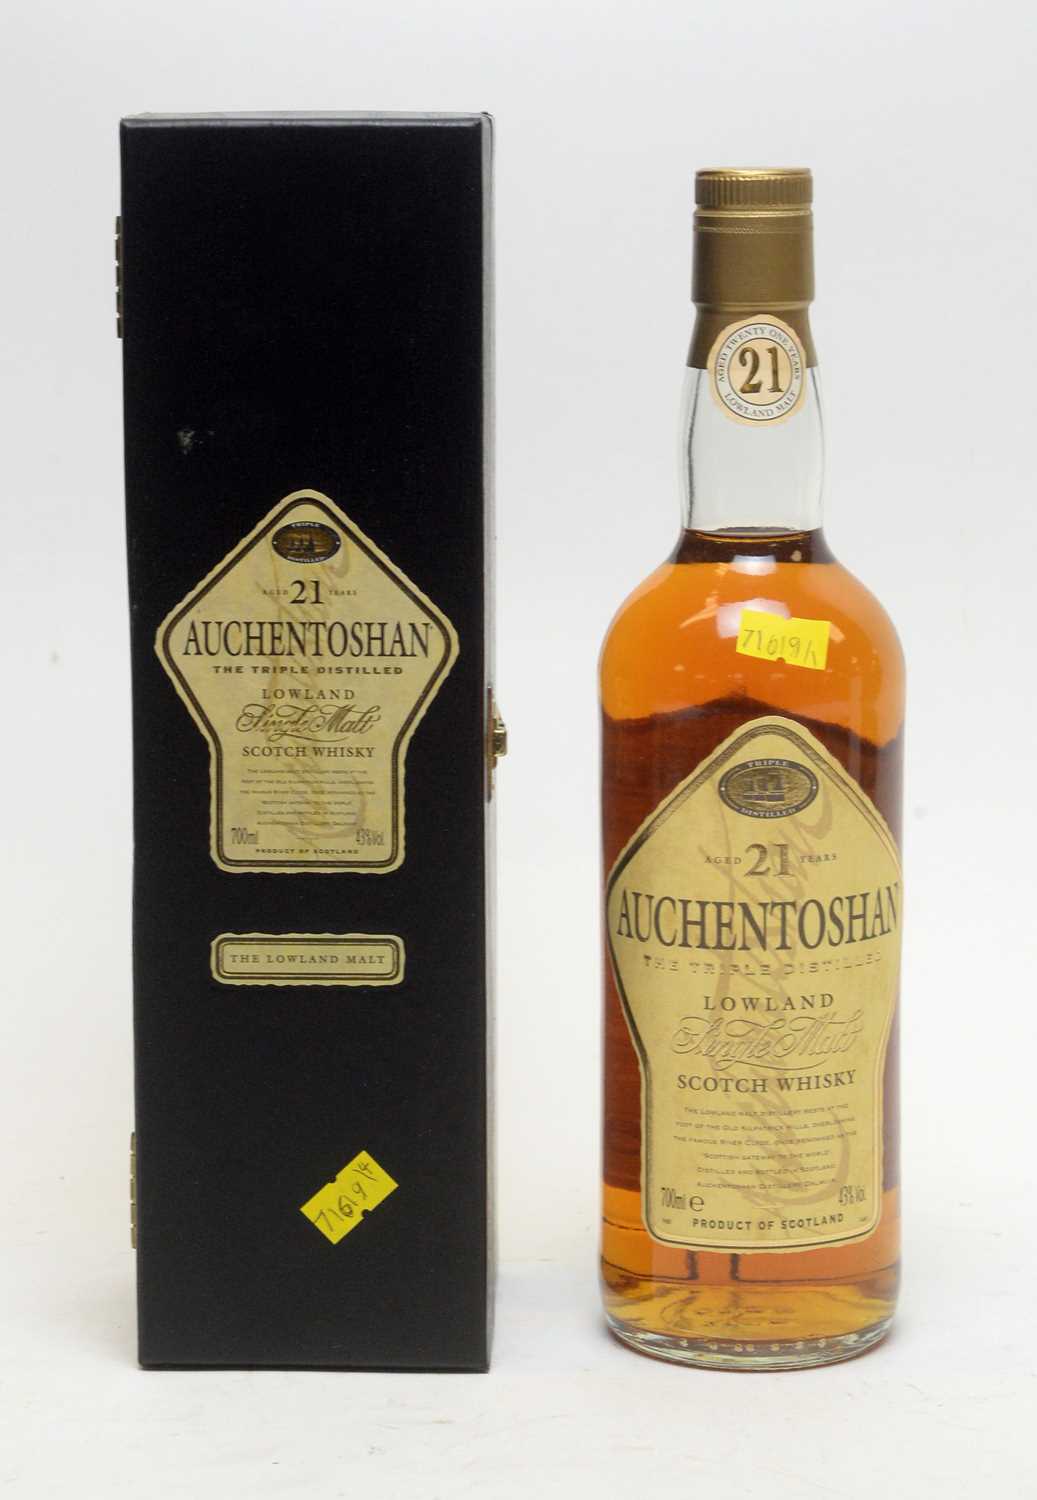 Lot 513 - Auchentoshan Aged 21 Years The Triple Distilled Single Malt Scotch Whisky